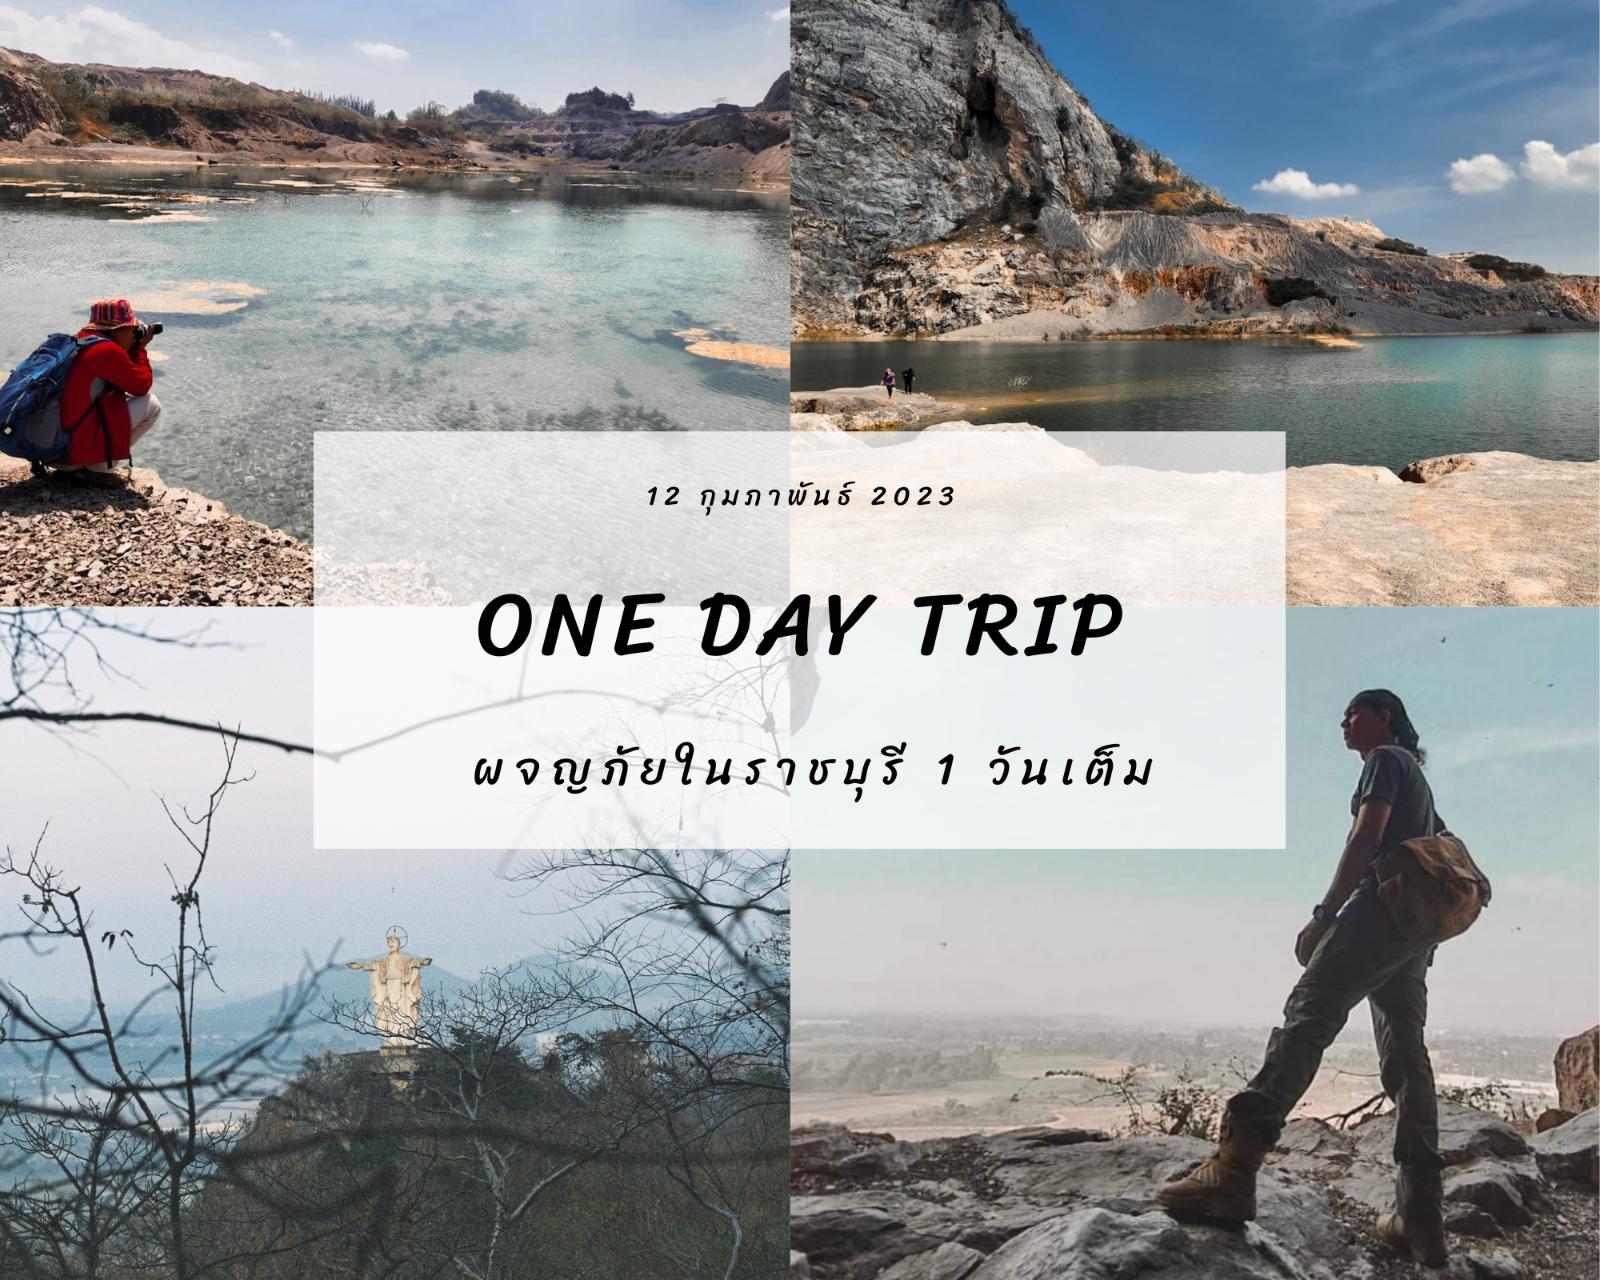 One Day Trip | ผจญภัย 1 วัน ที่ราชบุรี | 12 FEB 2023 - Pantip